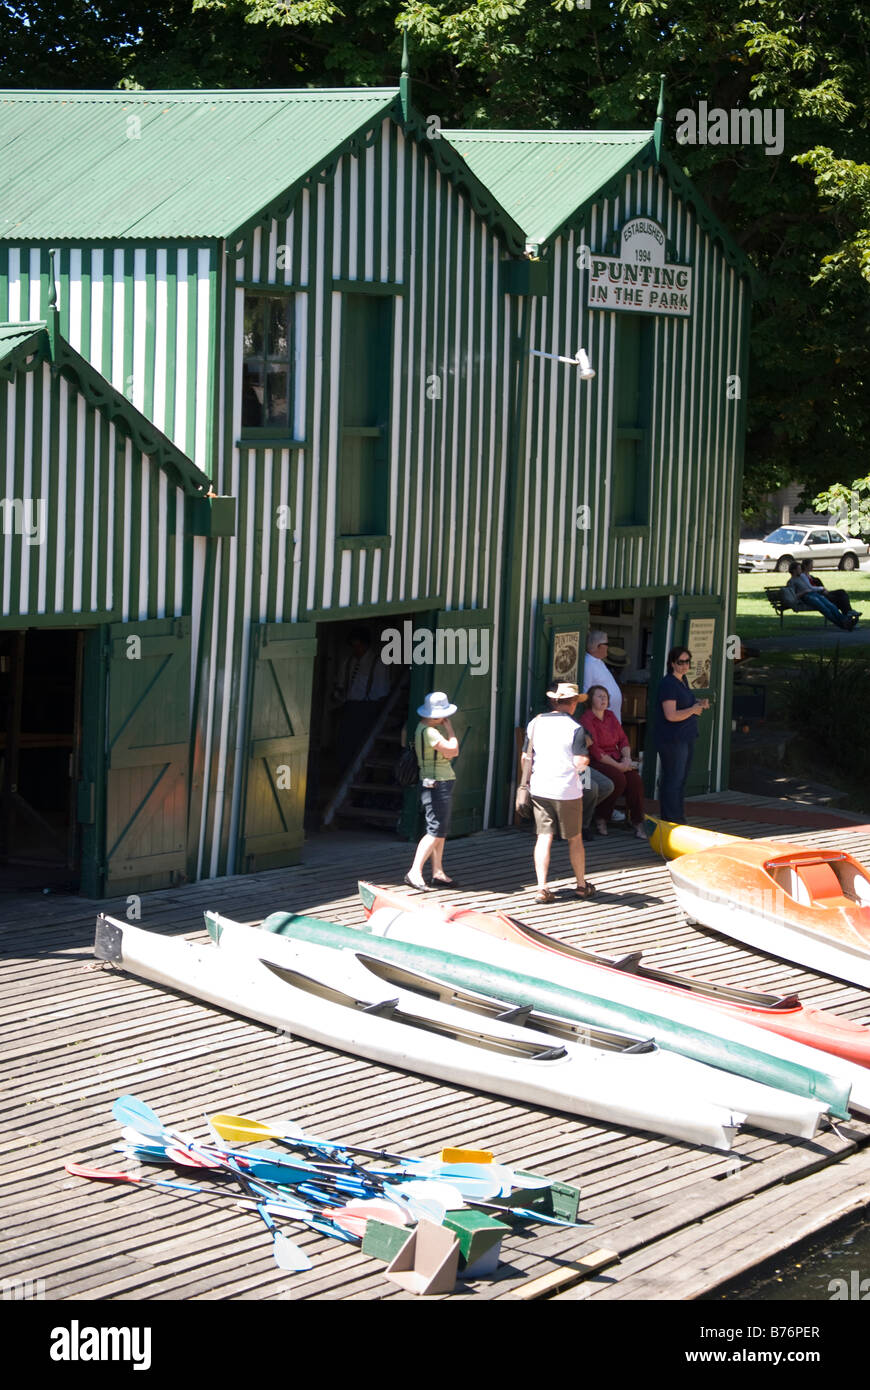 Boating on River Avon, Antigua Boatsheds, Cambridge Terrace, Christchurch, Canterbury, New Zealand Stock Photo